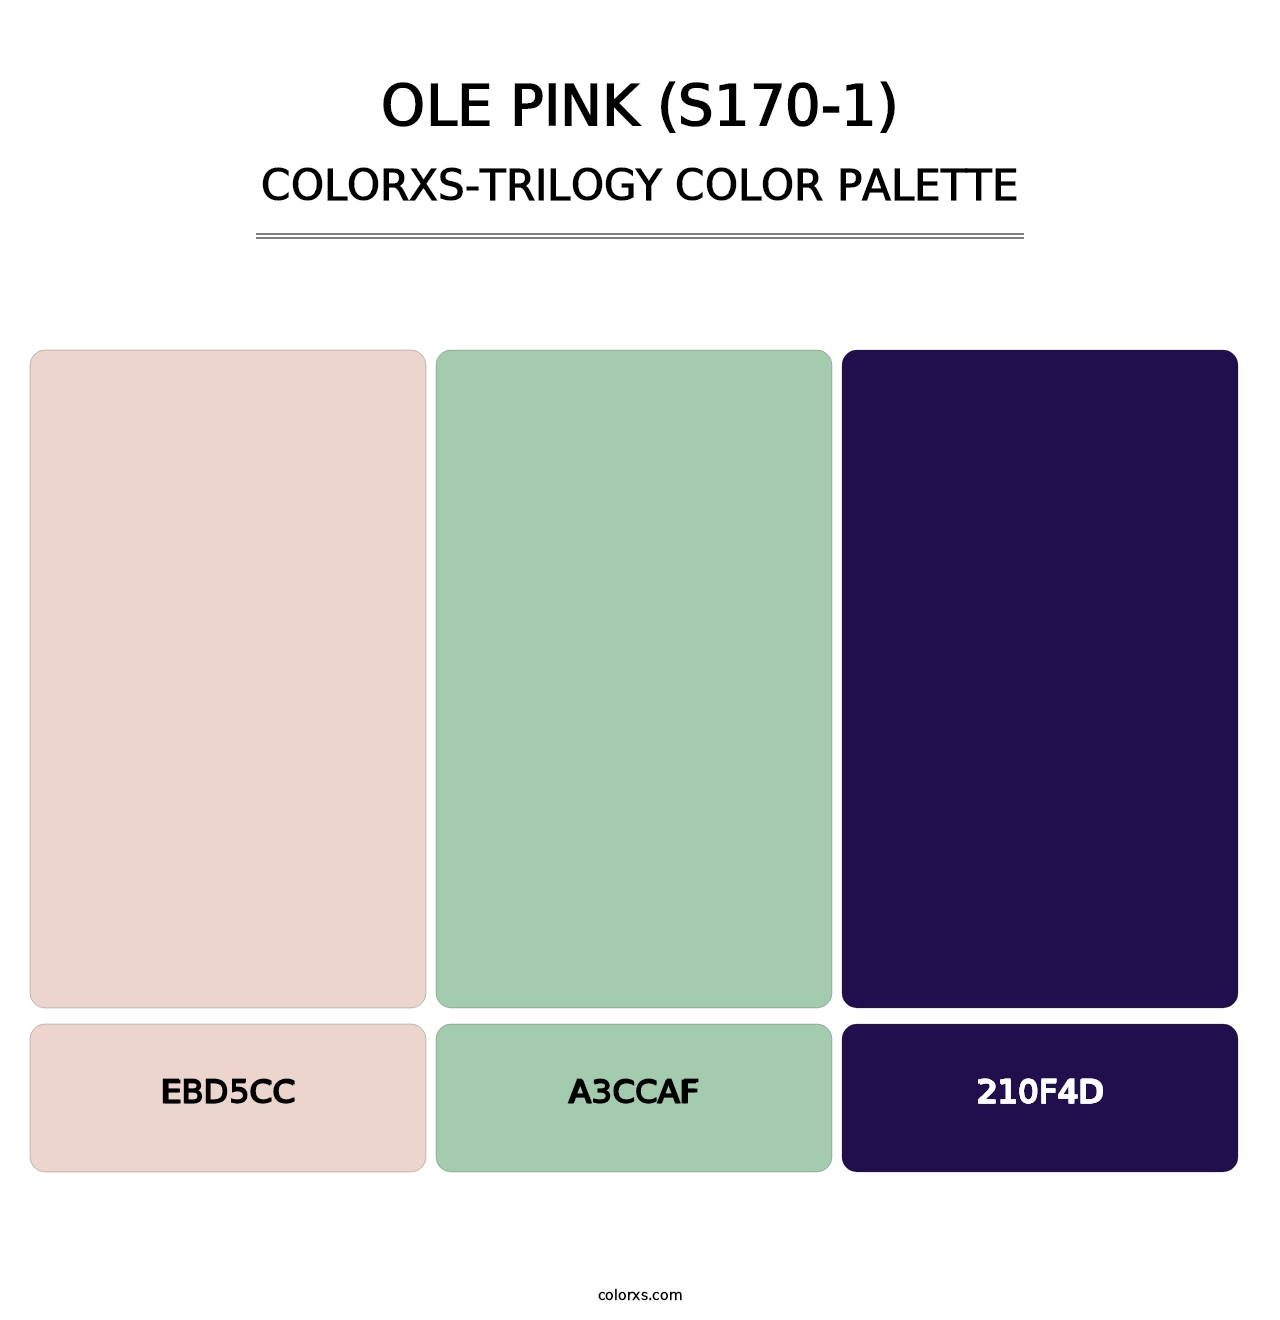 Ole Pink (S170-1) - Colorxs Trilogy Palette